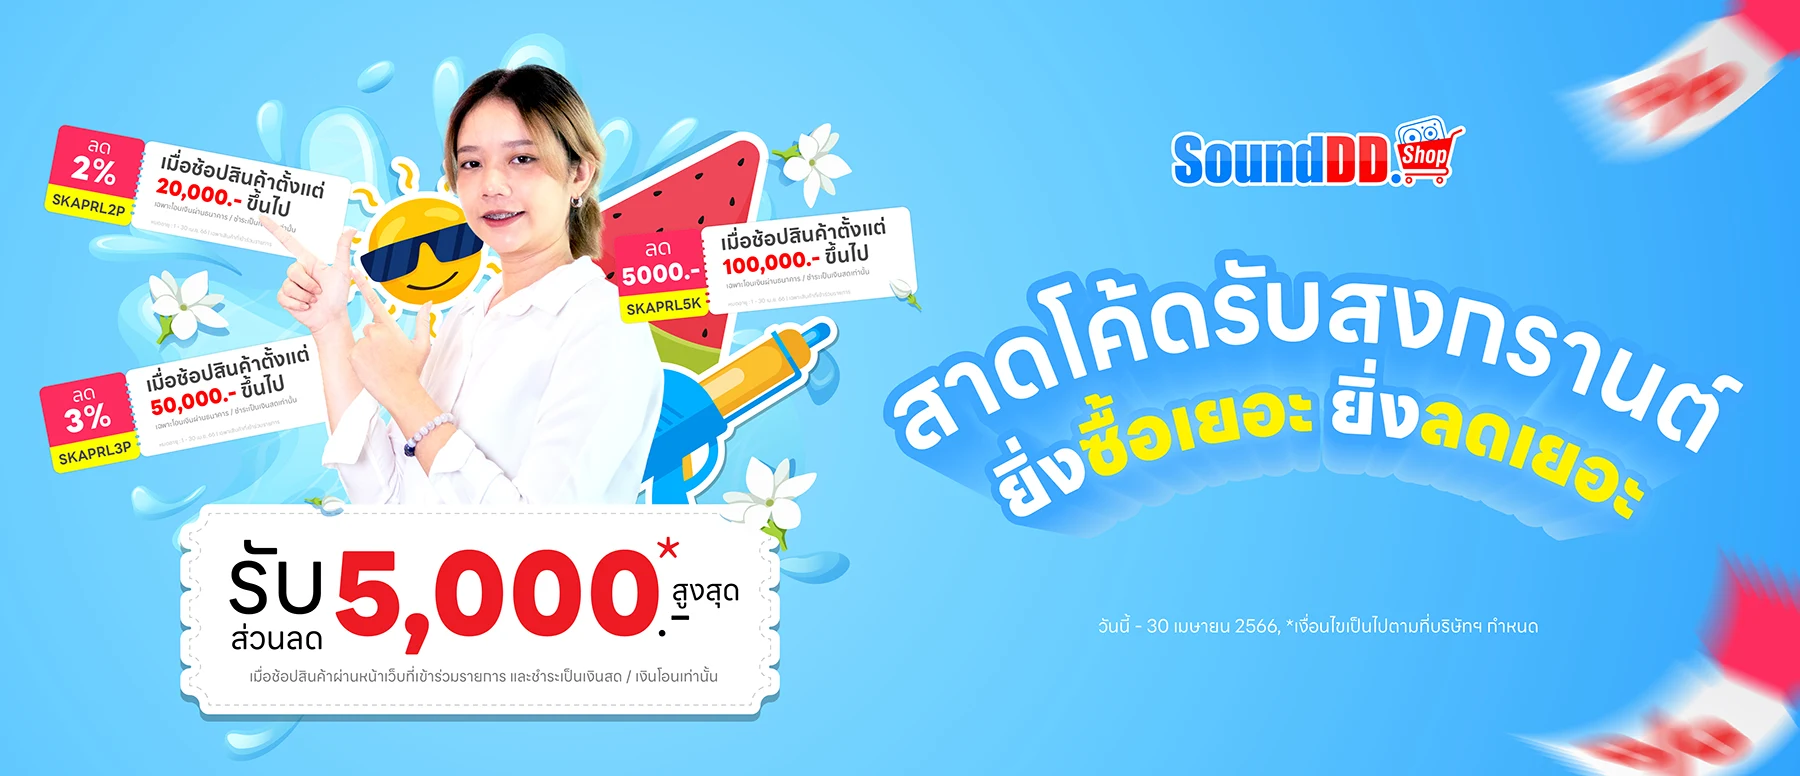 SoundDD Songkran Fes